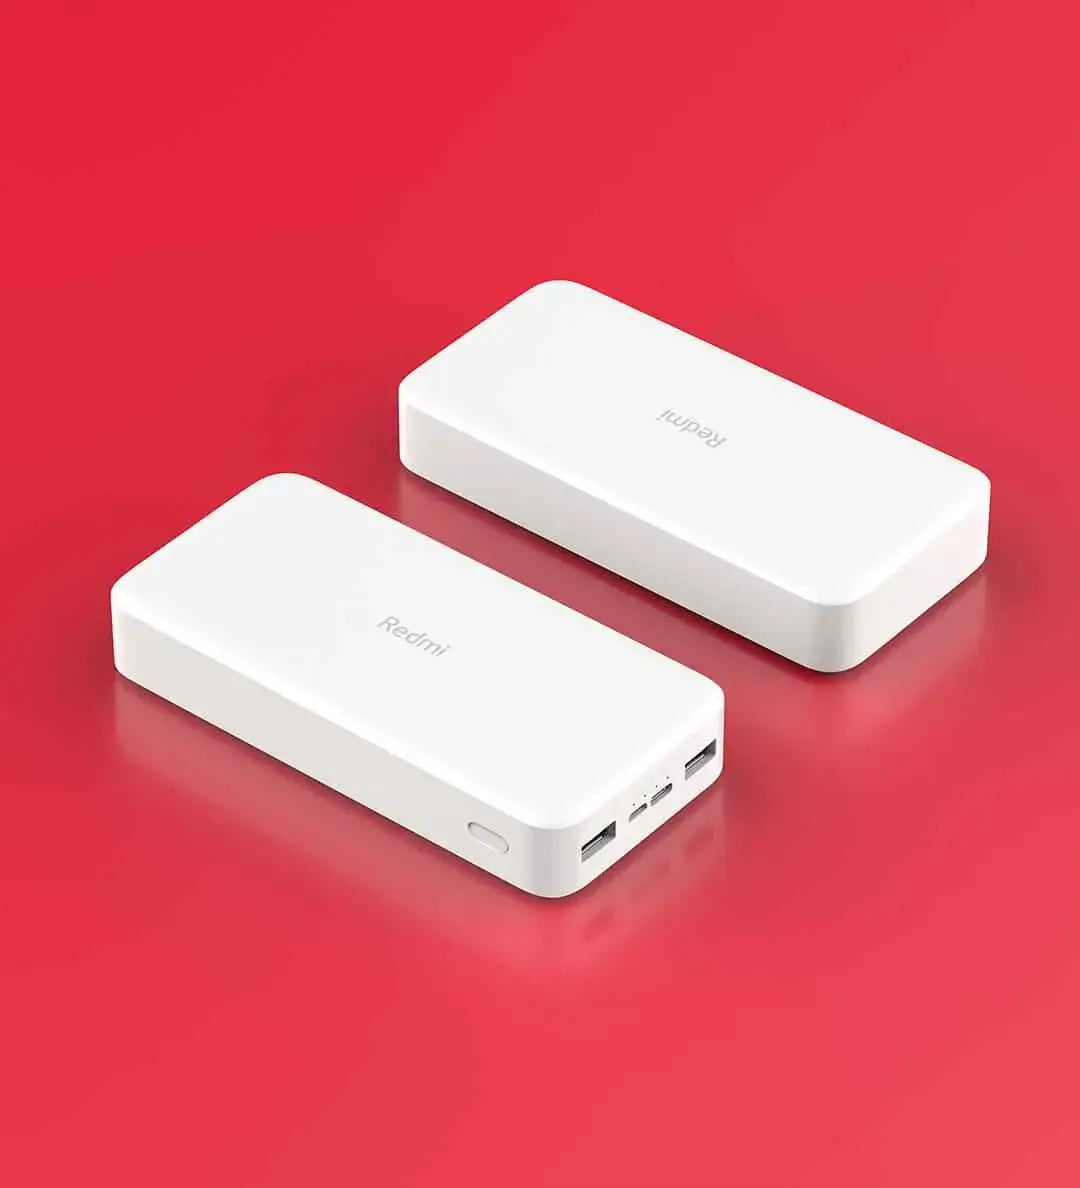 Xiaomi Redmi PowerBank 20000mAh Fast Charge Version – White